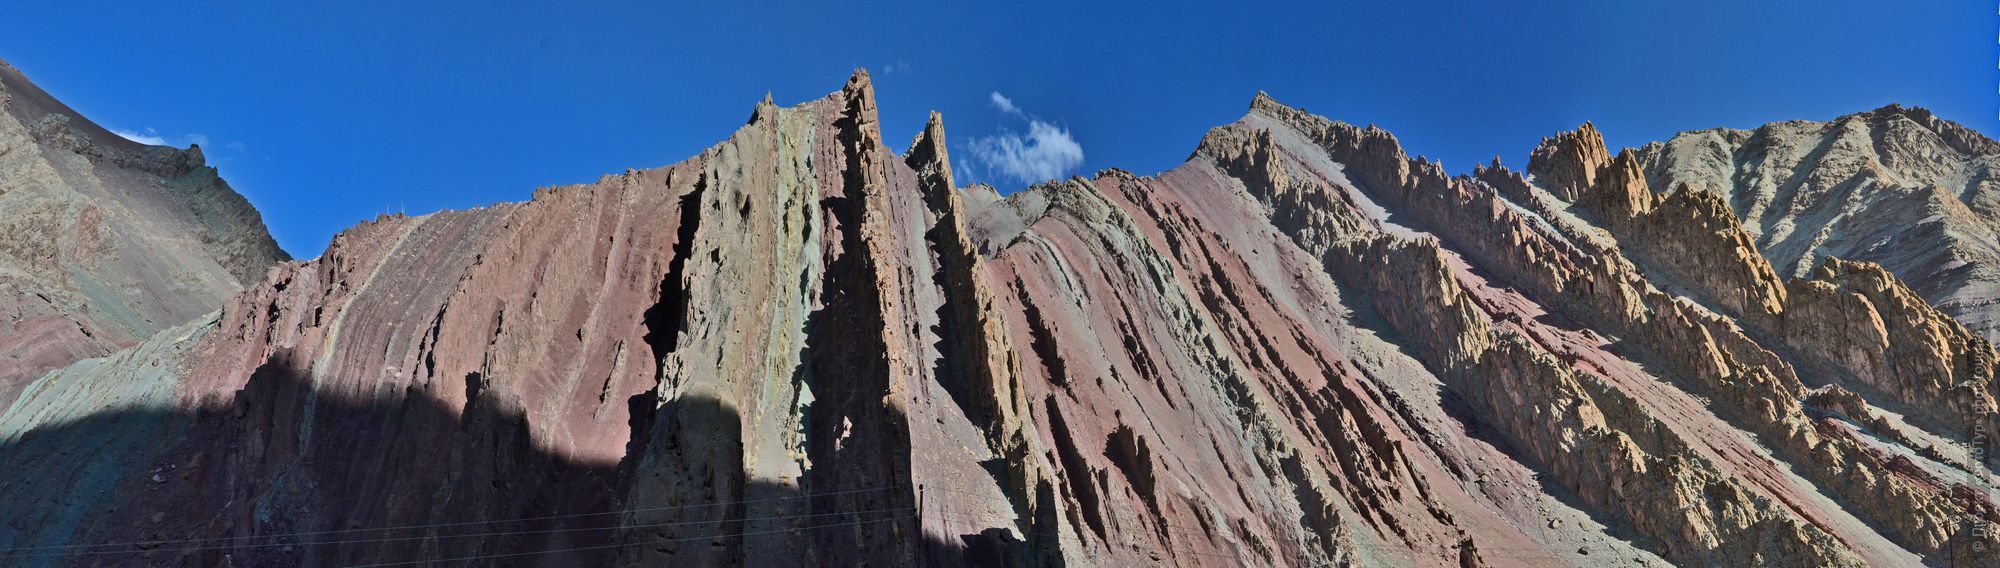 Red rocks gorge, Rumtse. Tour Legends of Tibet: Ladakh, Lamayuru, Da Khan and Nubra, 19.09. - 28.09.2019.